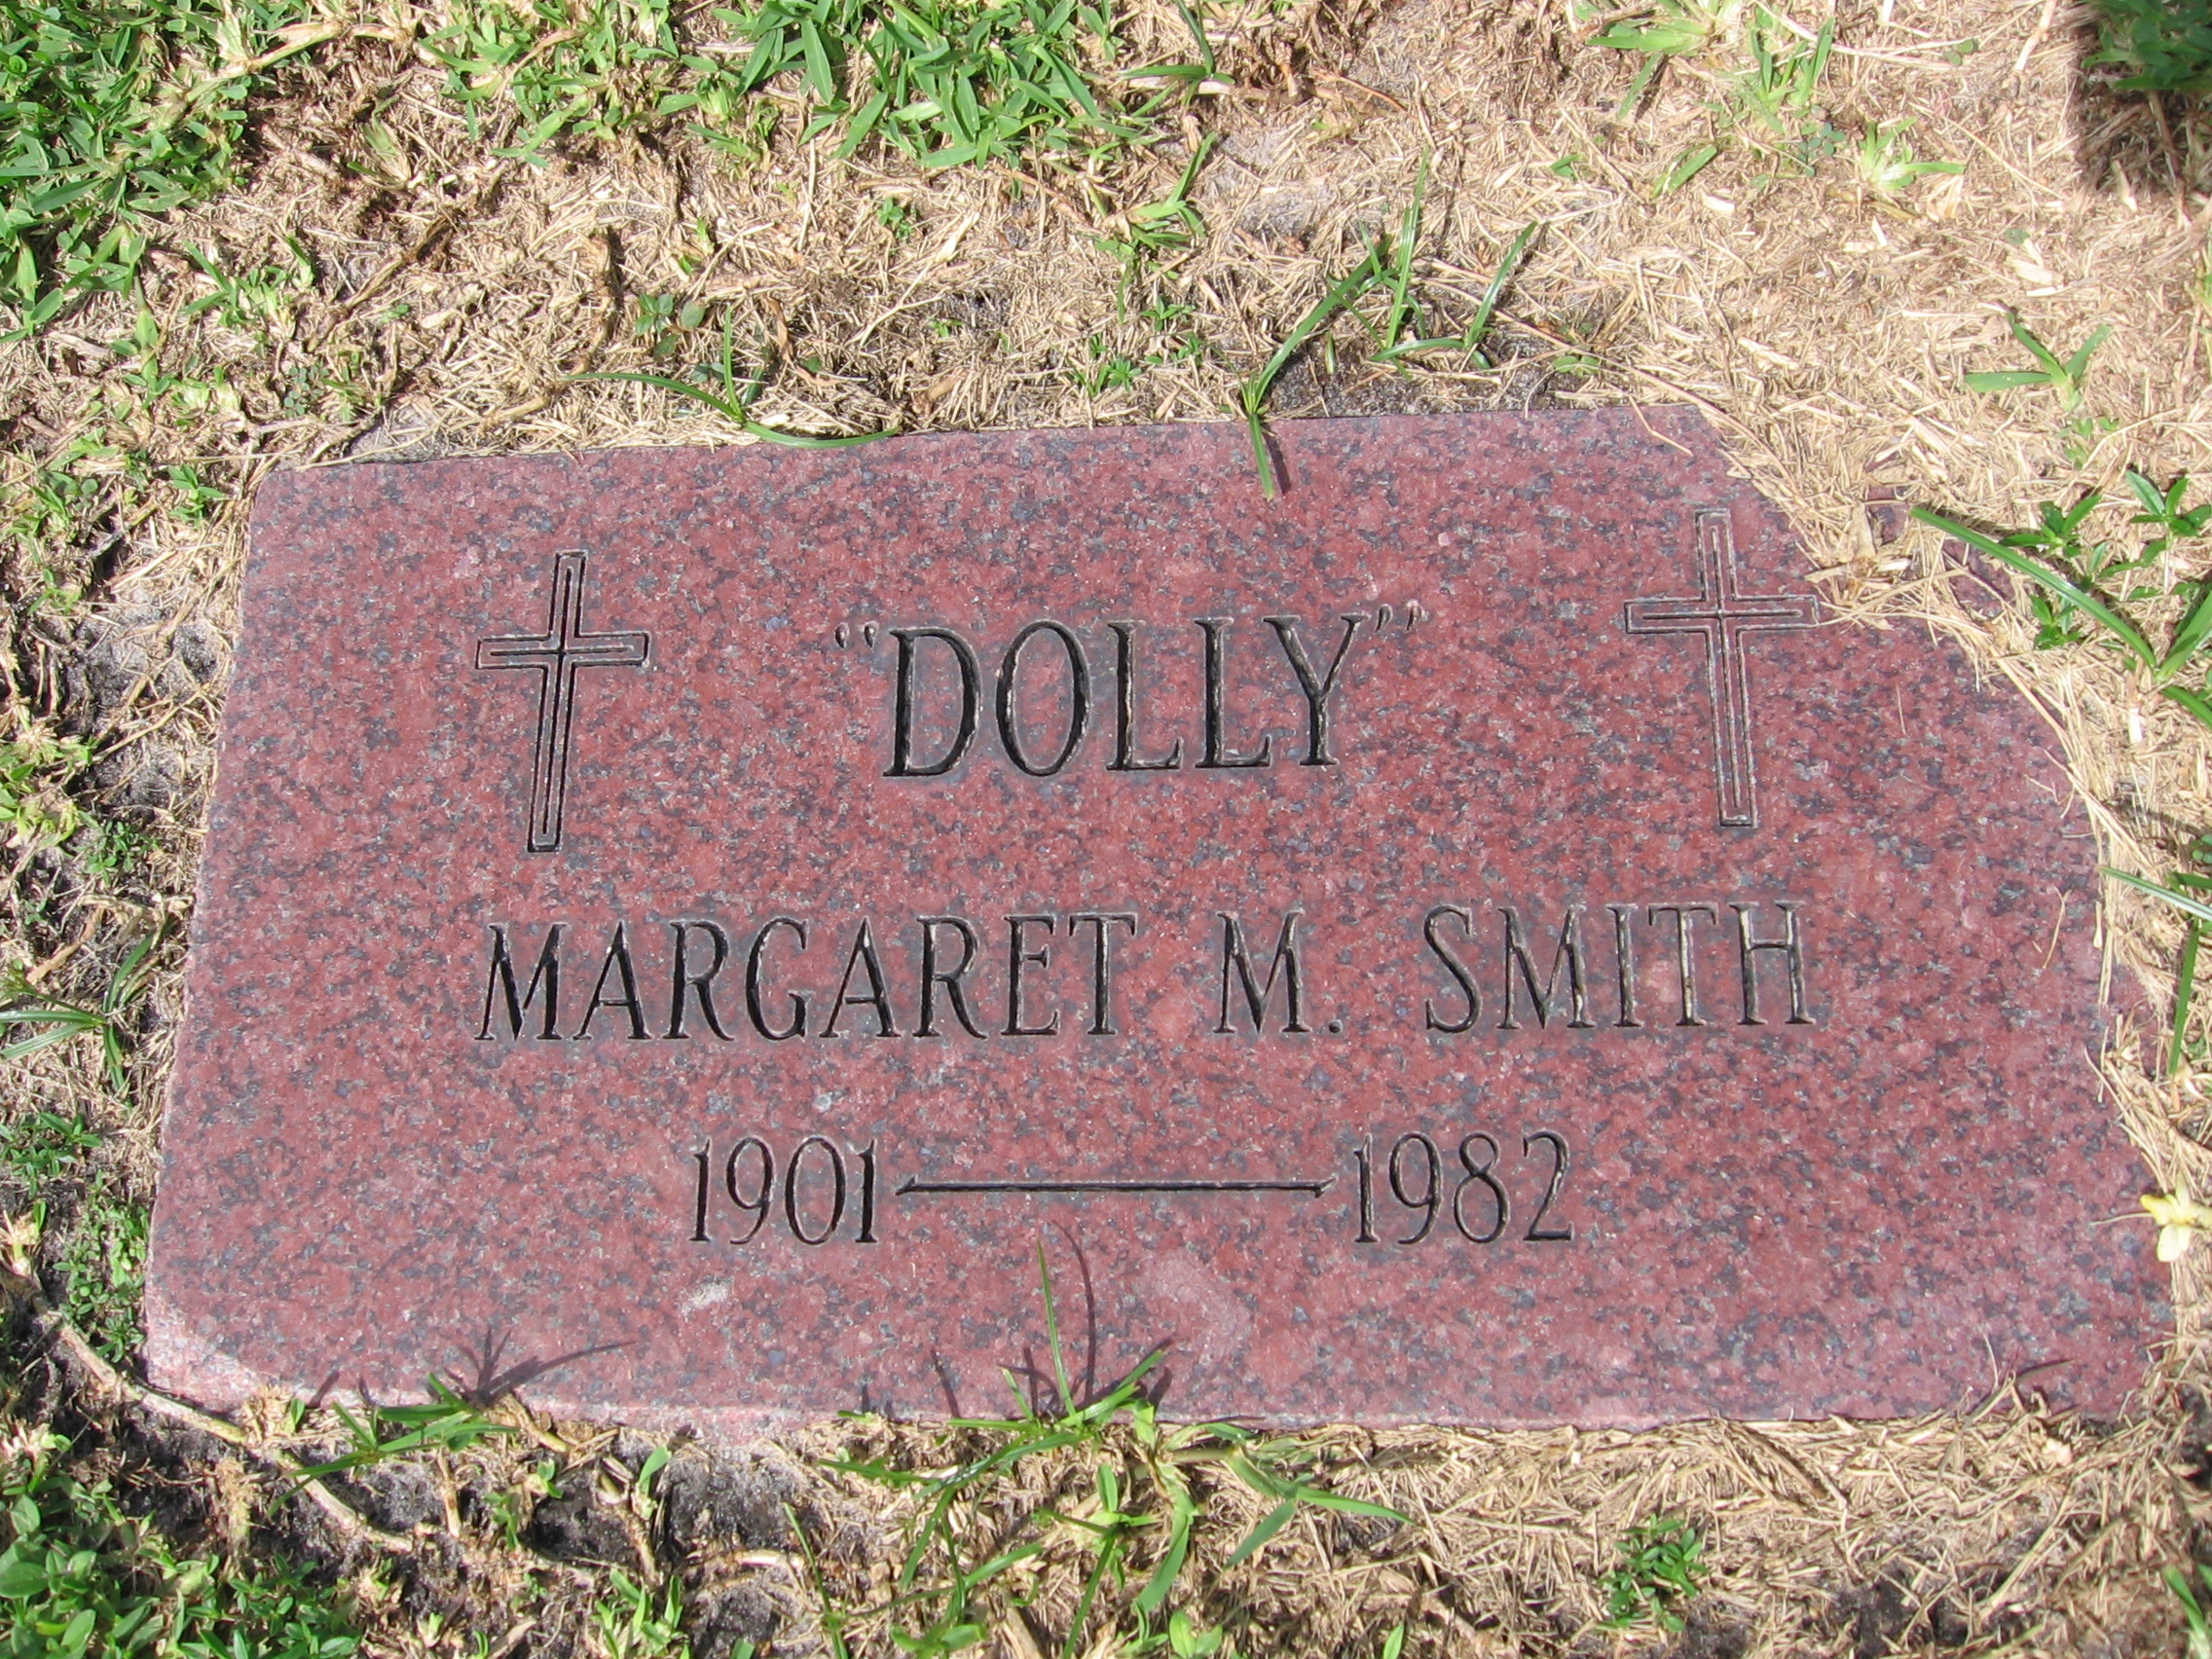 Margaret M "Dolly" Smith